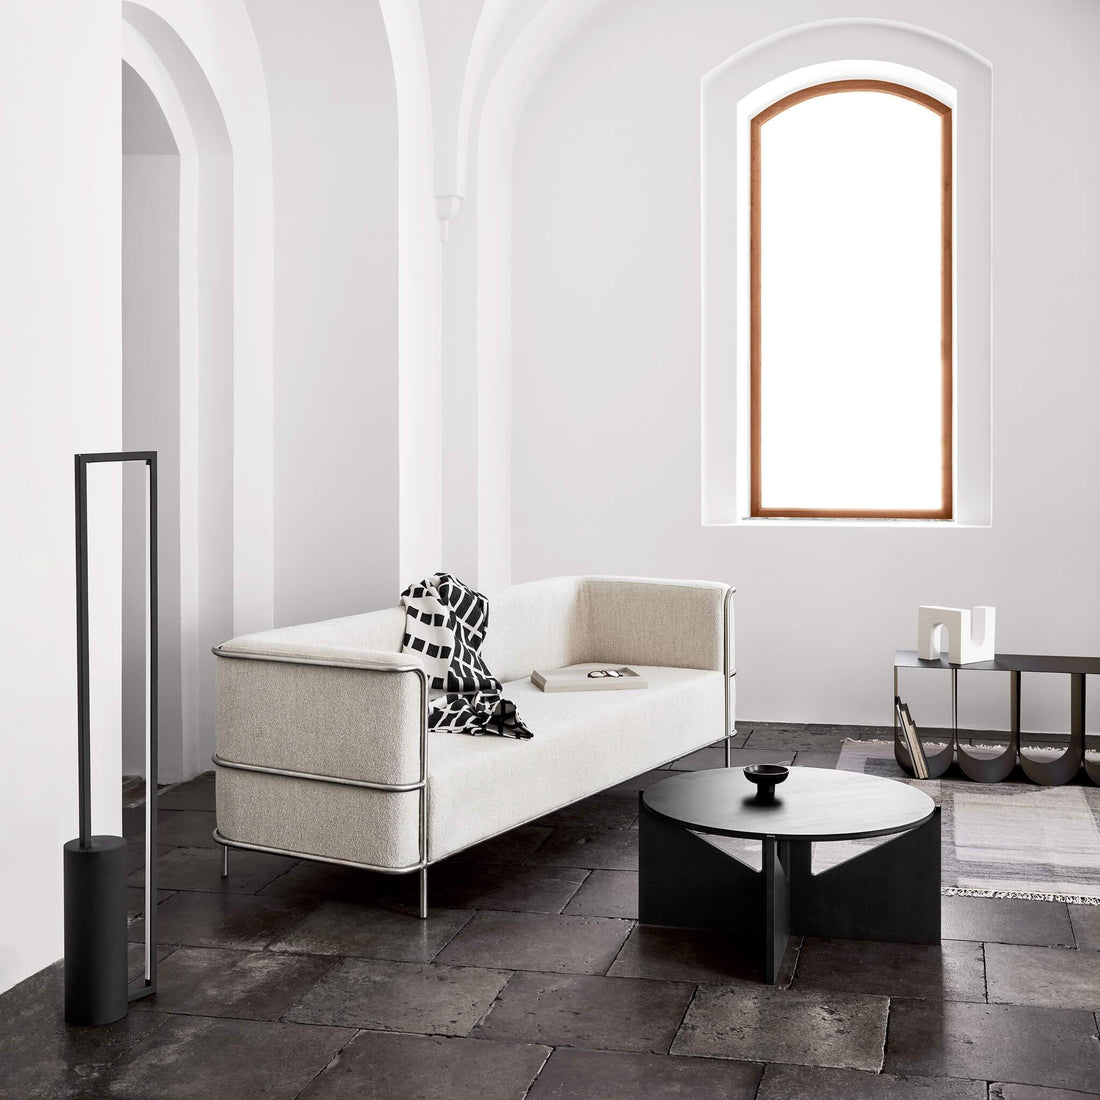 Modernist Beige 3 | Sofa